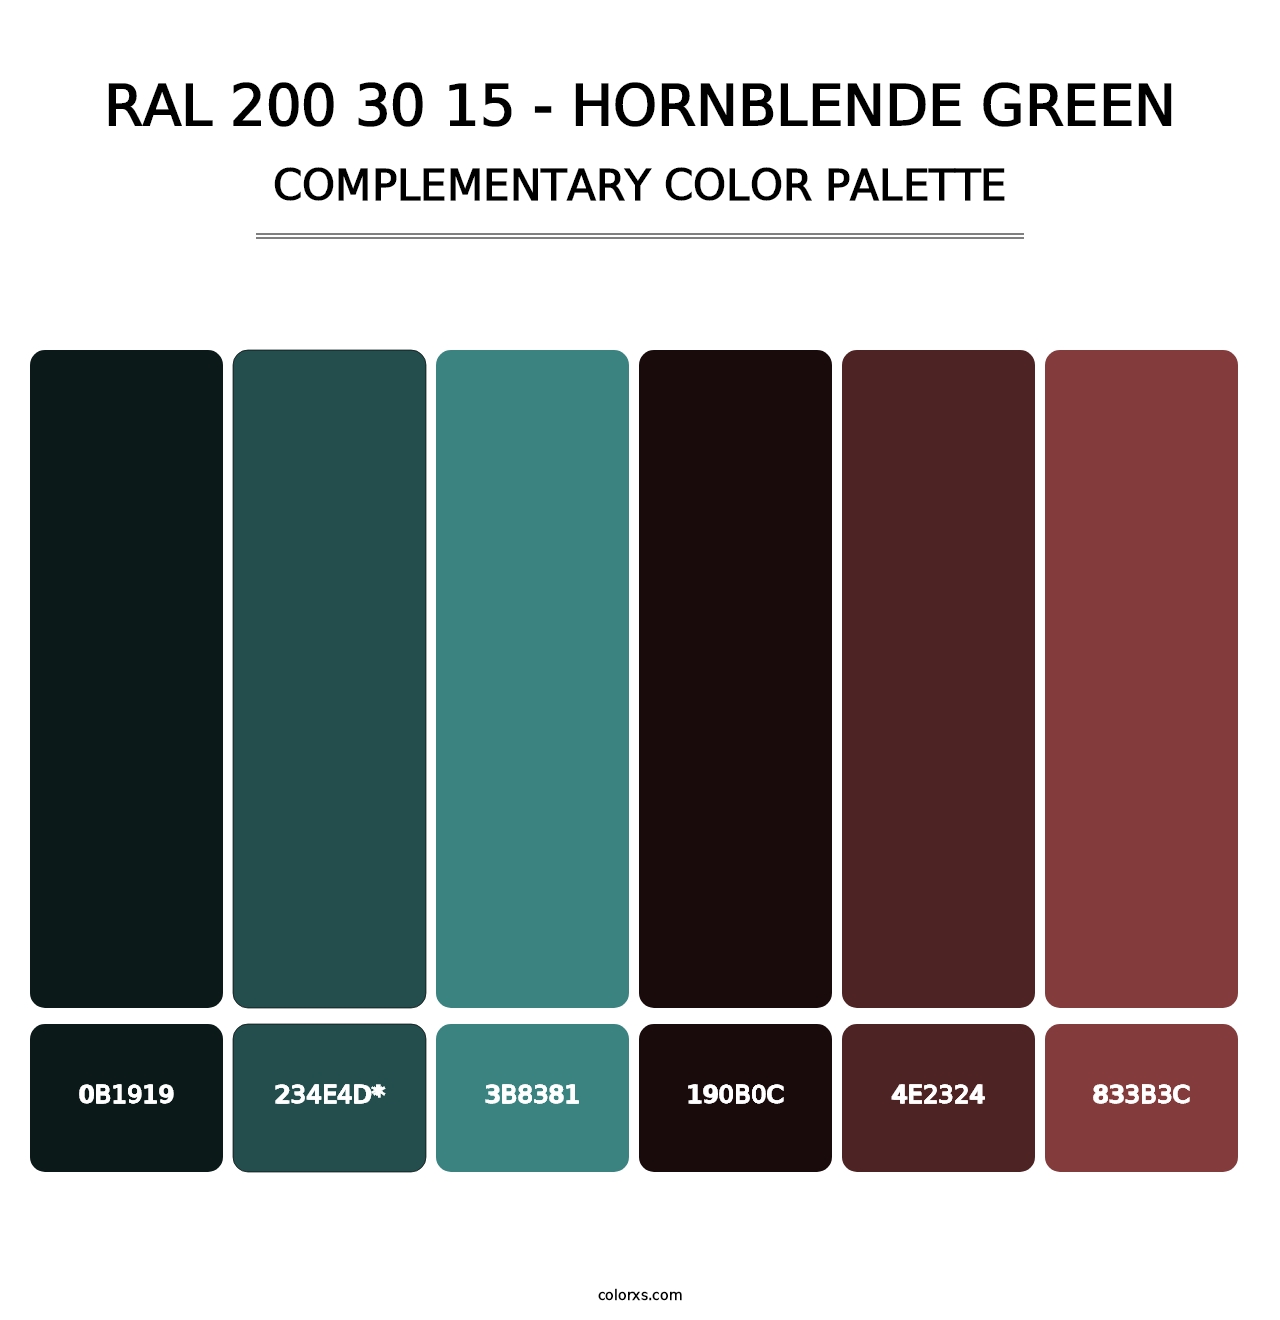 RAL 200 30 15 - Hornblende Green - Complementary Color Palette